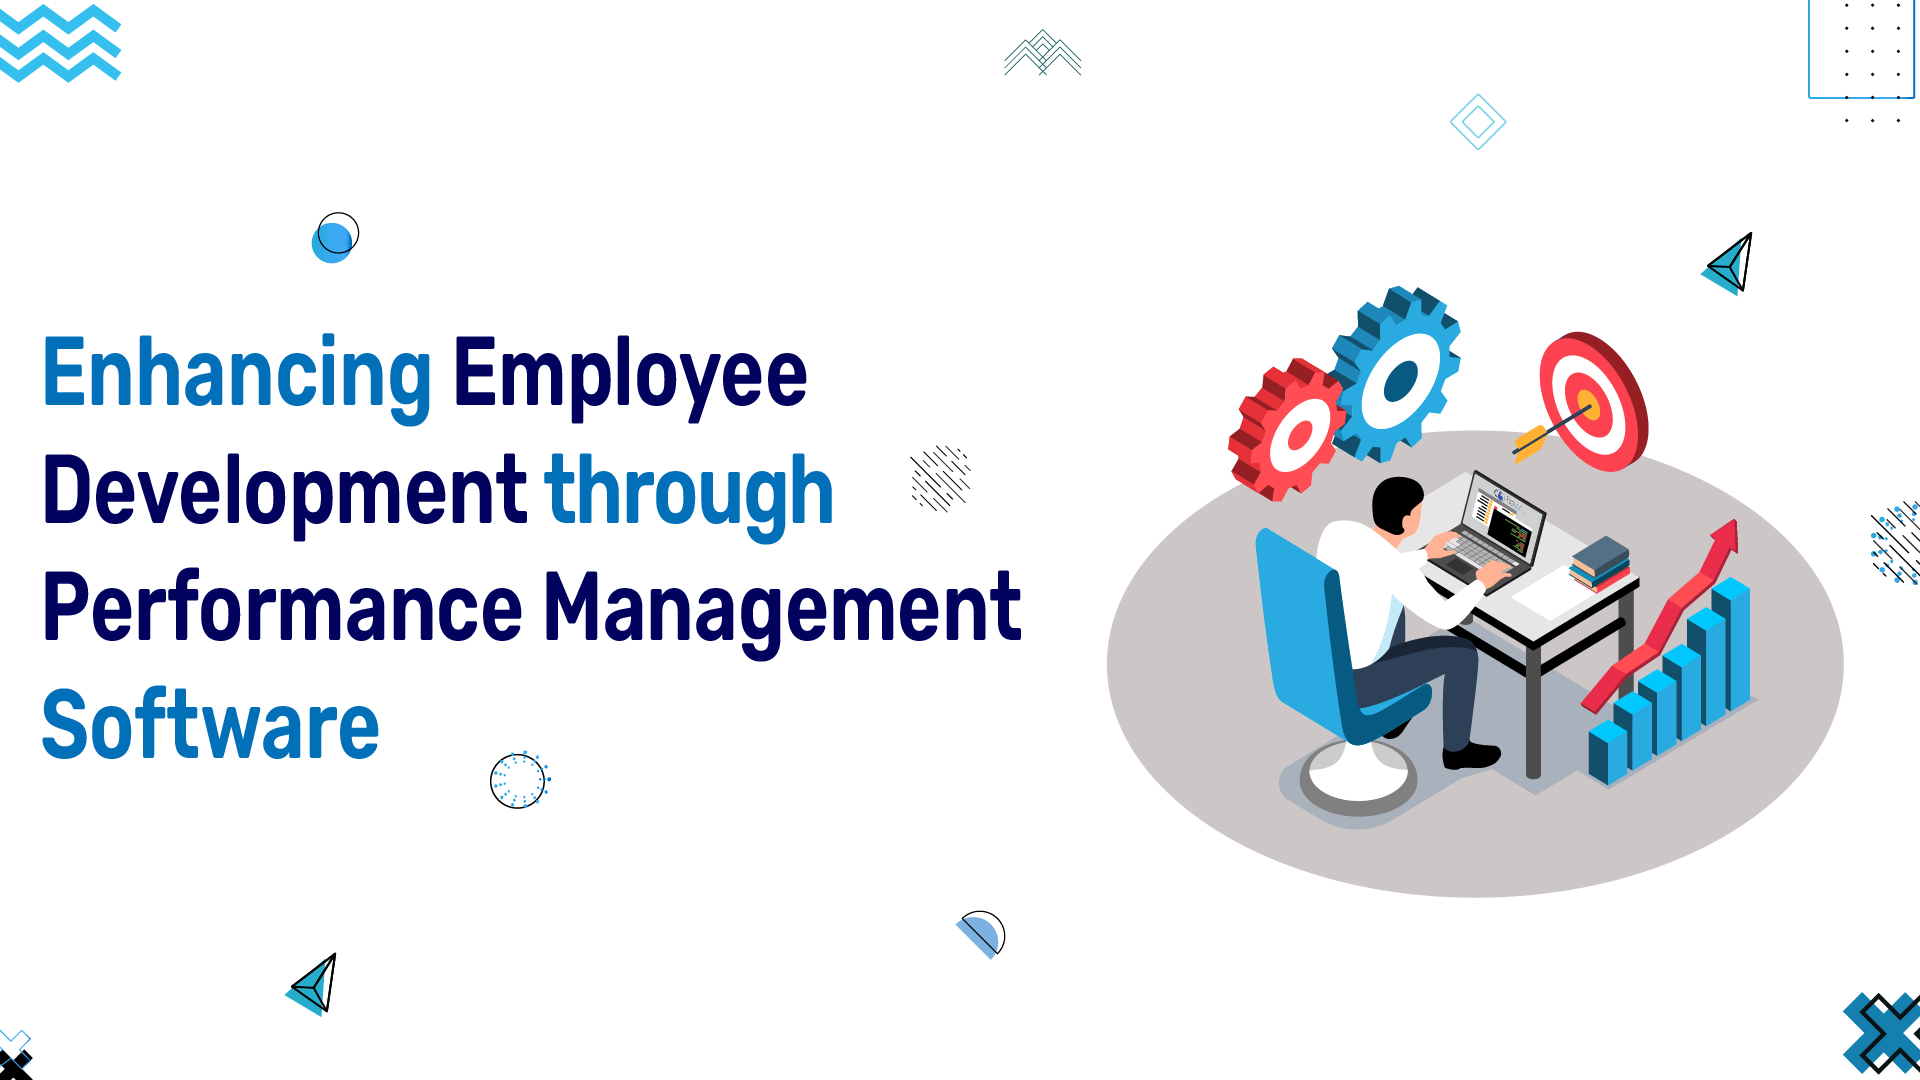 Performance Management Software for Employee Development